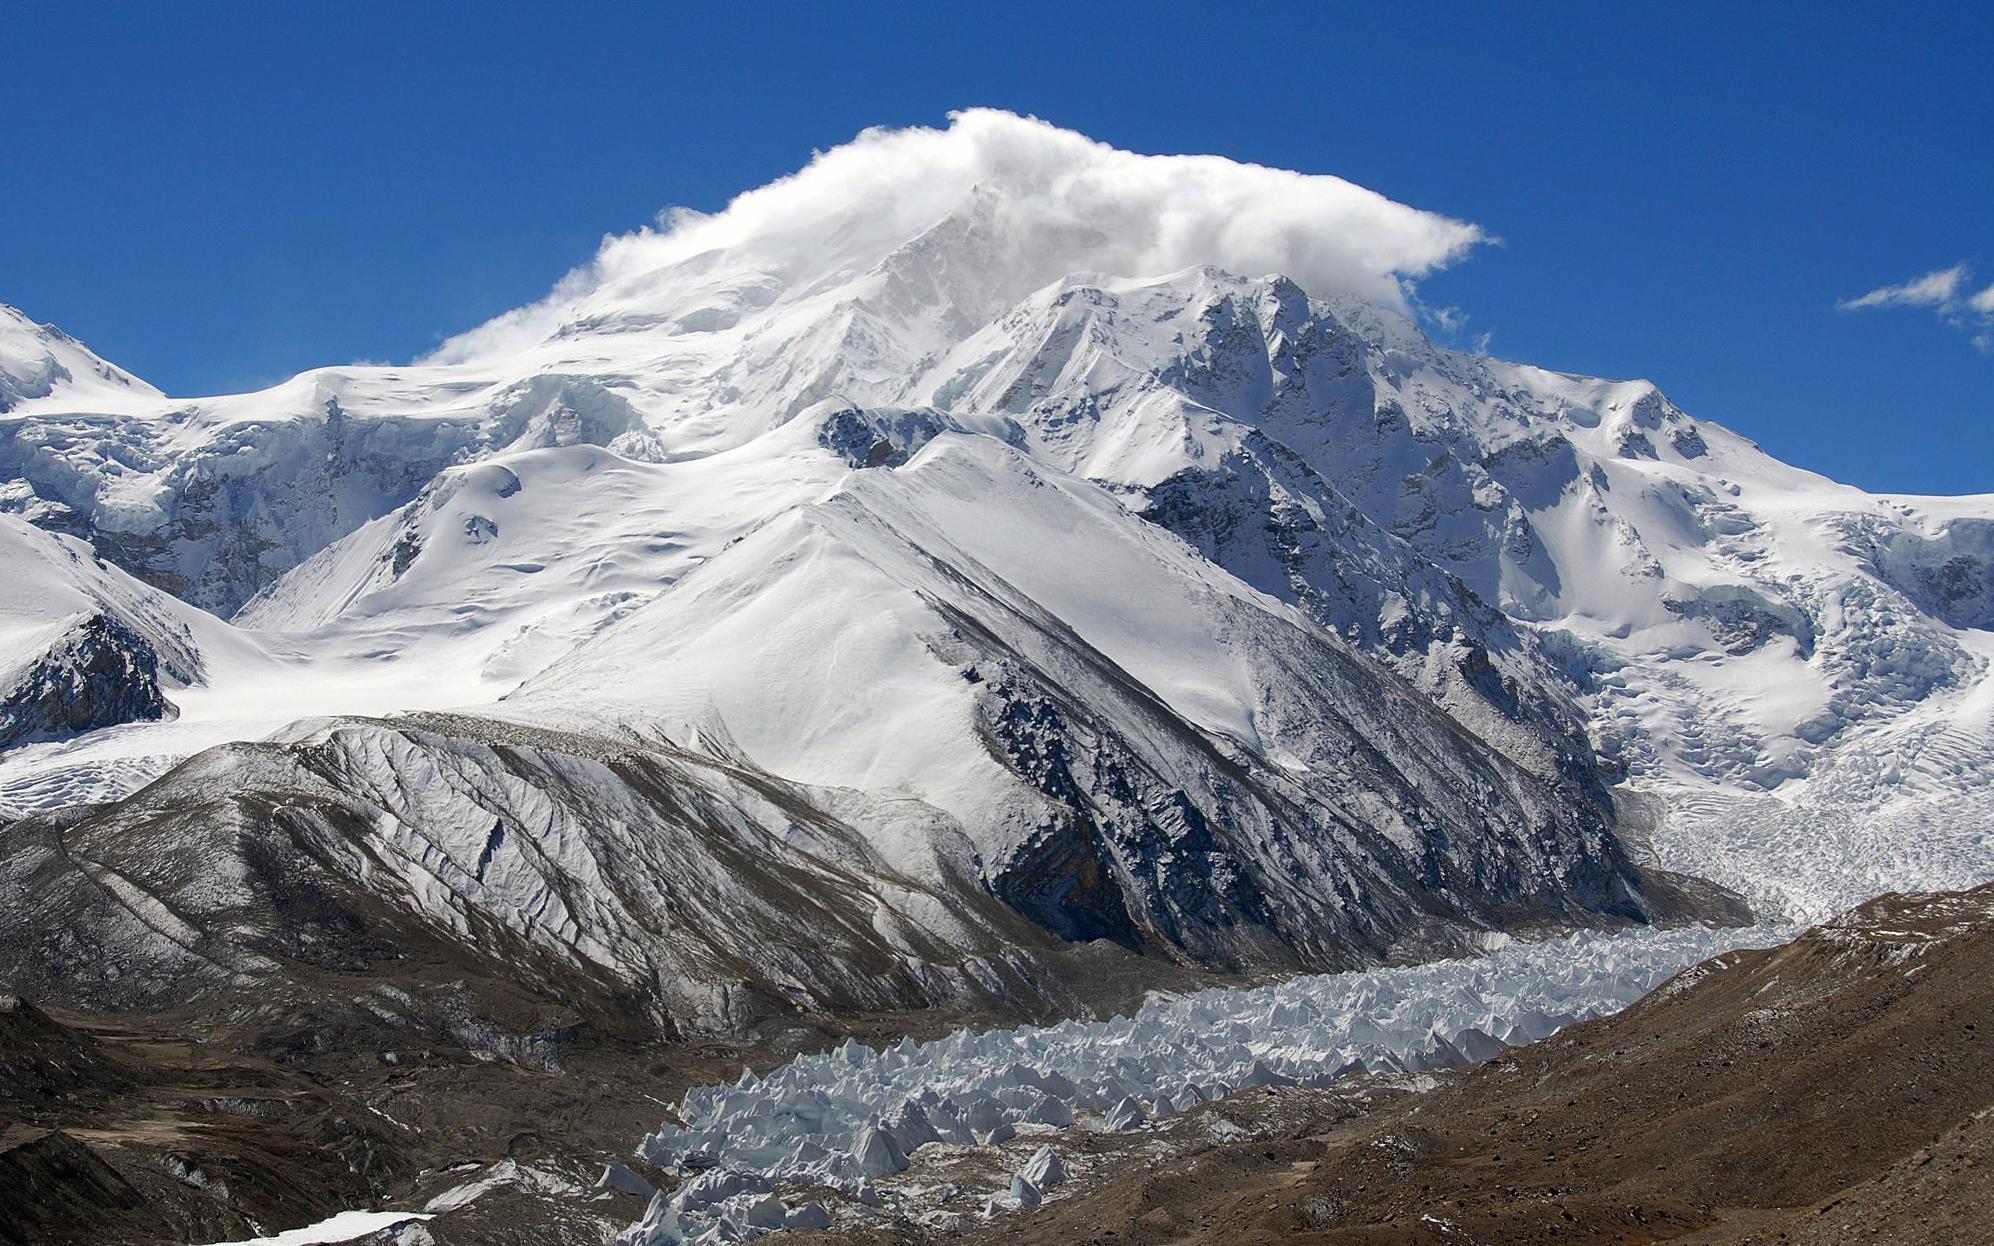 Shishapangma - Ideal first 8000m peak